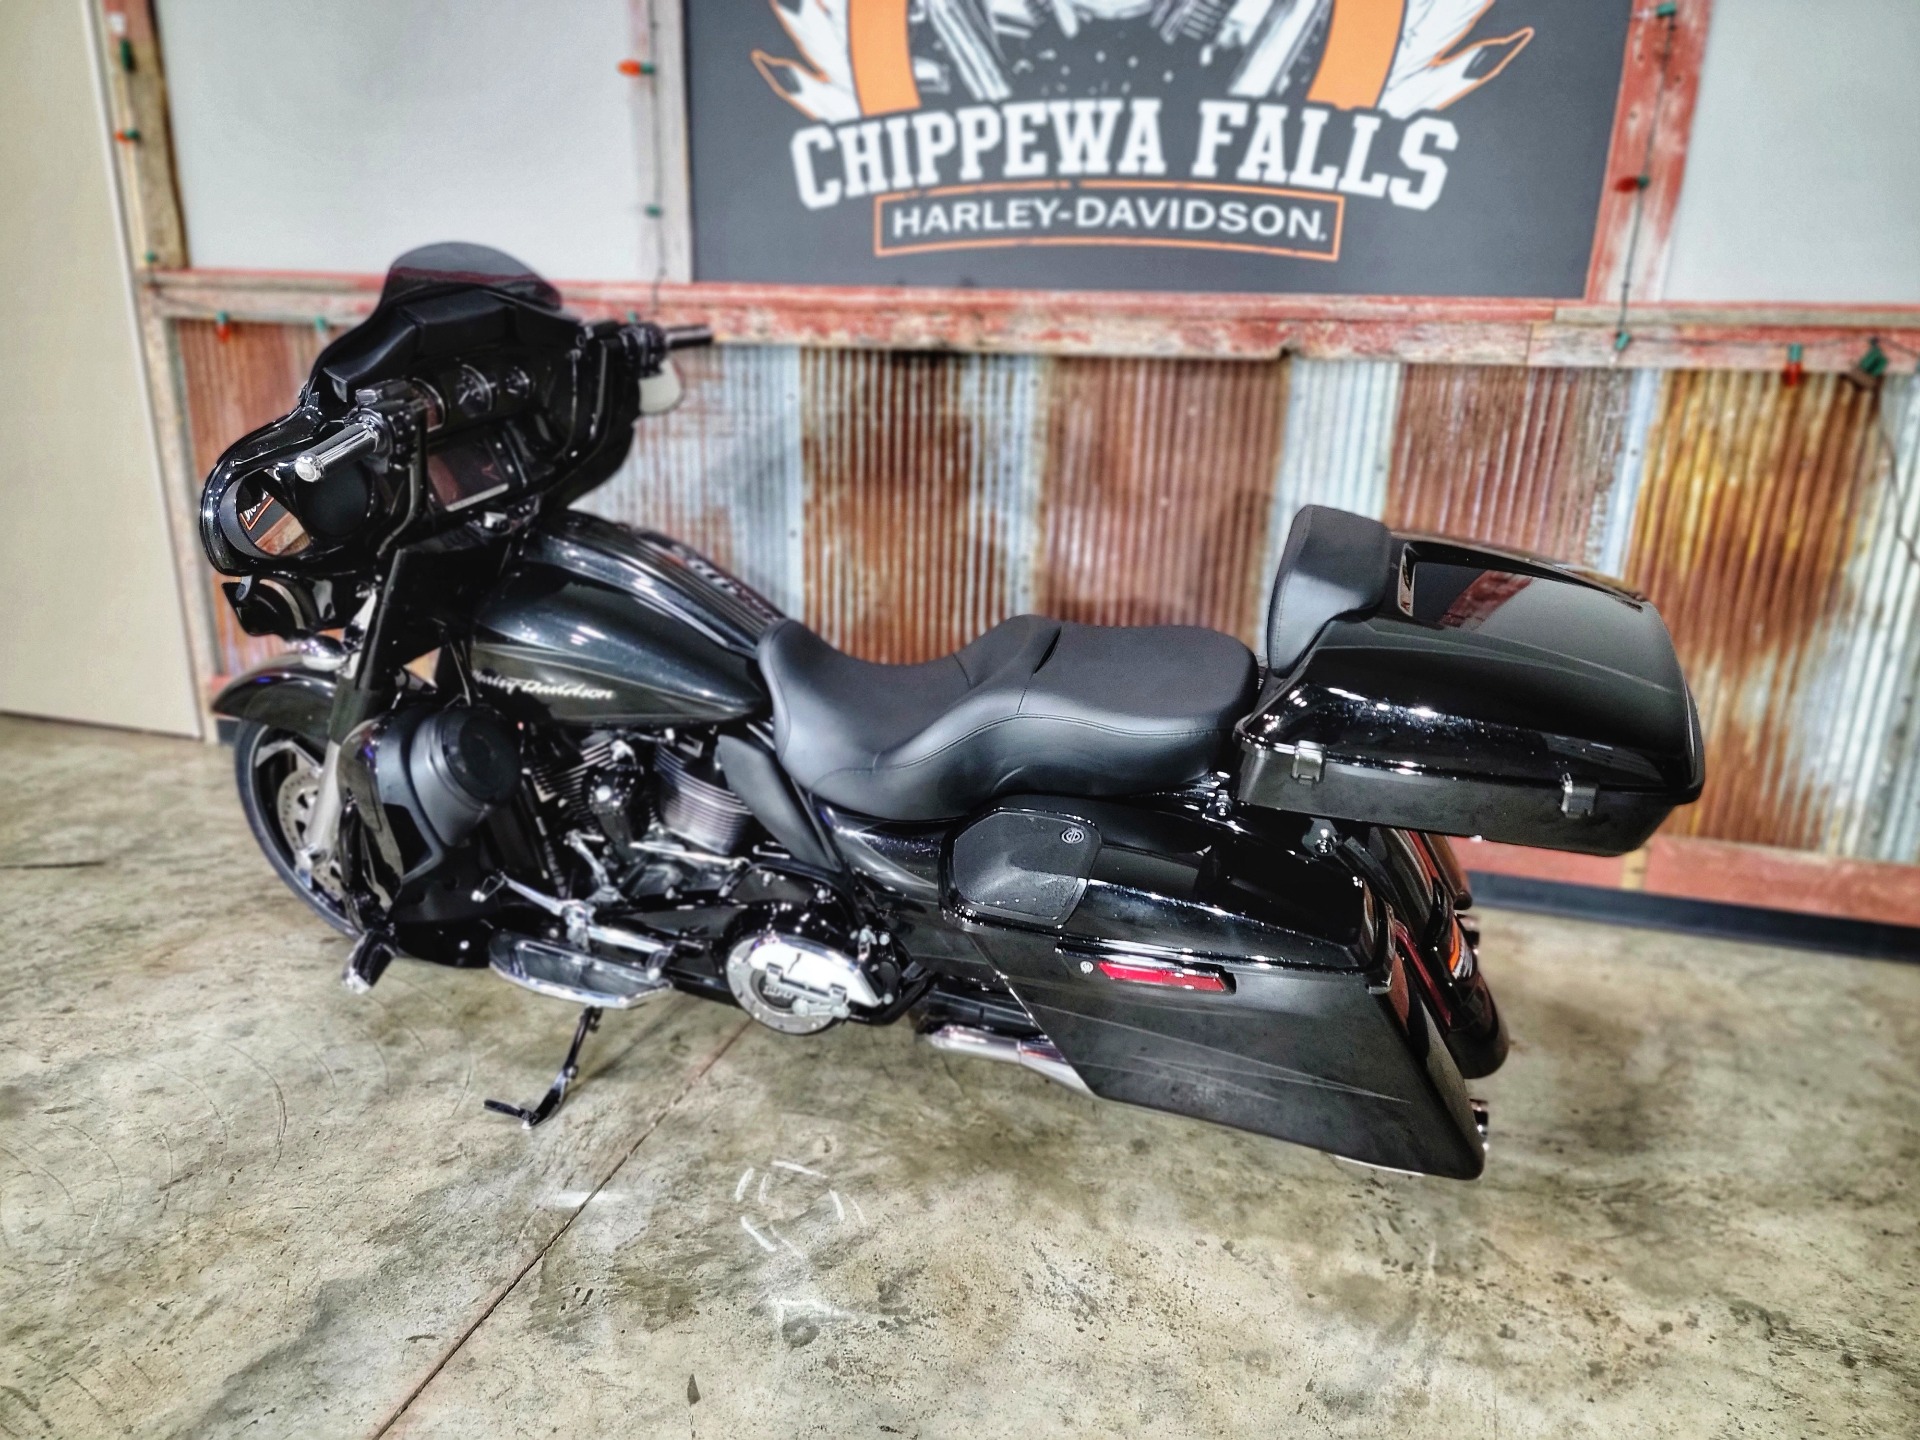 2017 Harley-Davidson CVO™ Street Glide® in Chippewa Falls, Wisconsin - Photo 15